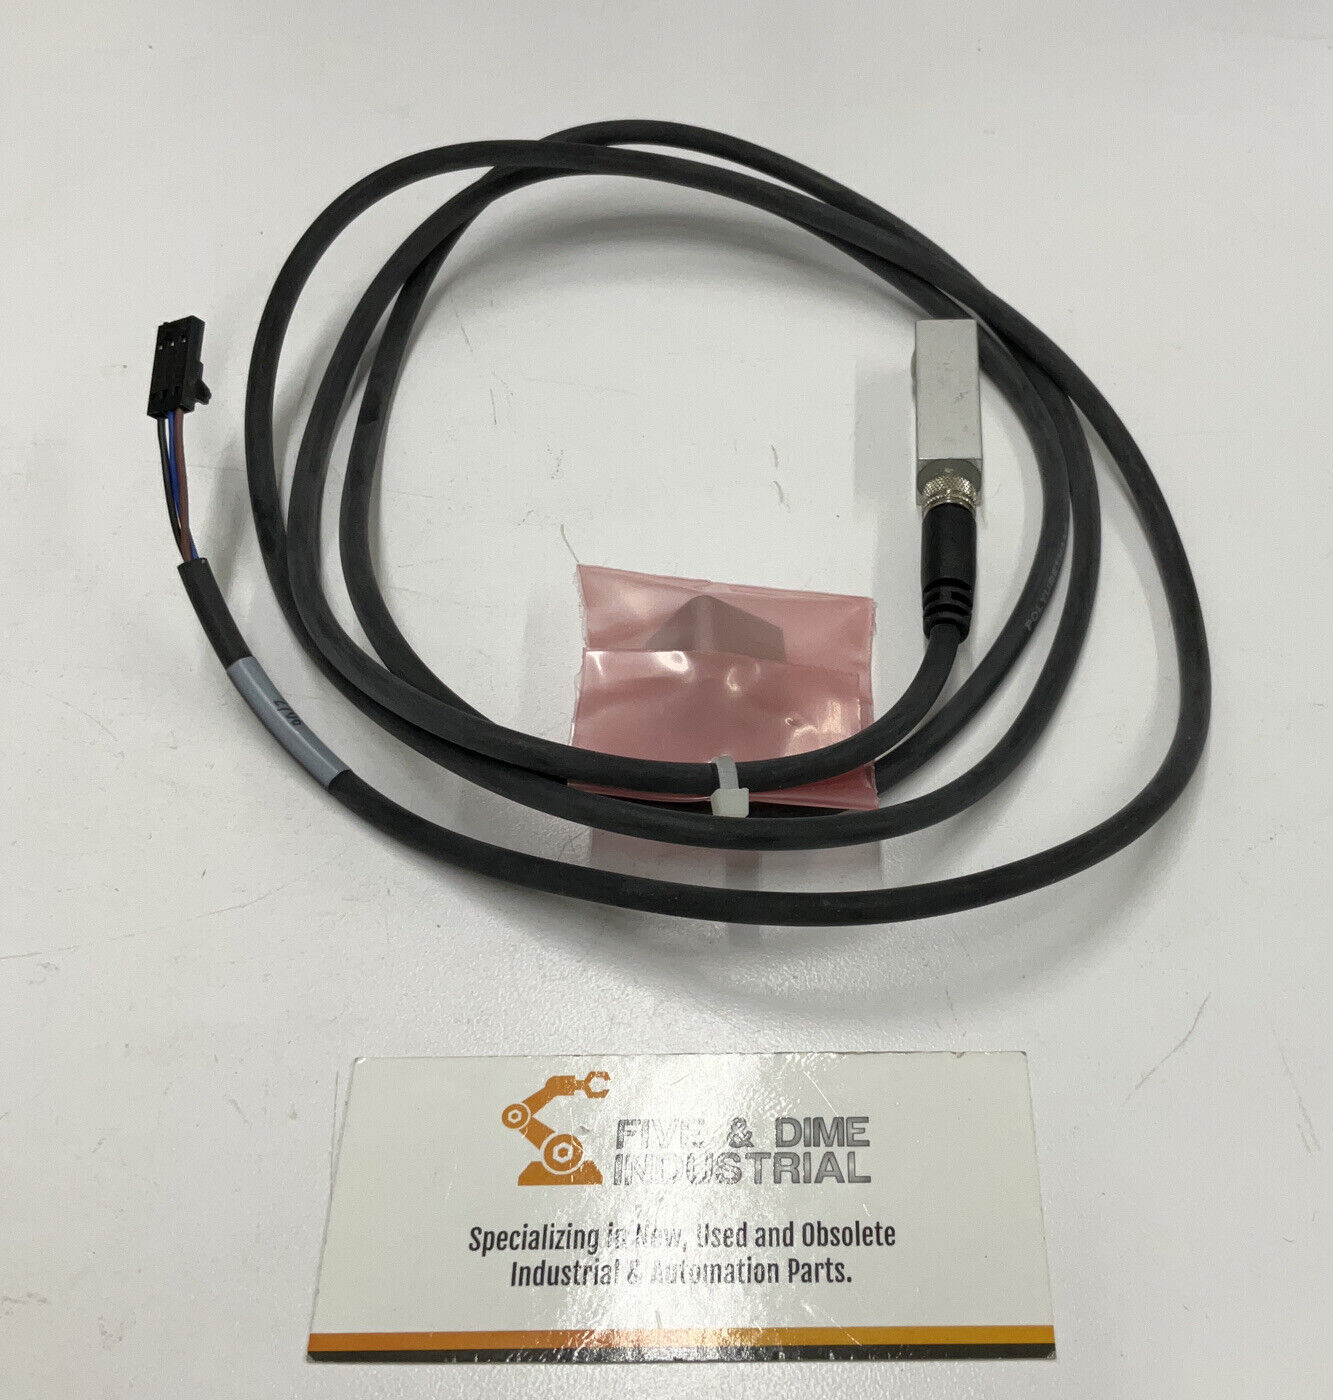 Origa 47081701 Type IS Proximity Sensor 10-30VDC w/ Bracket & Cable (BL190)